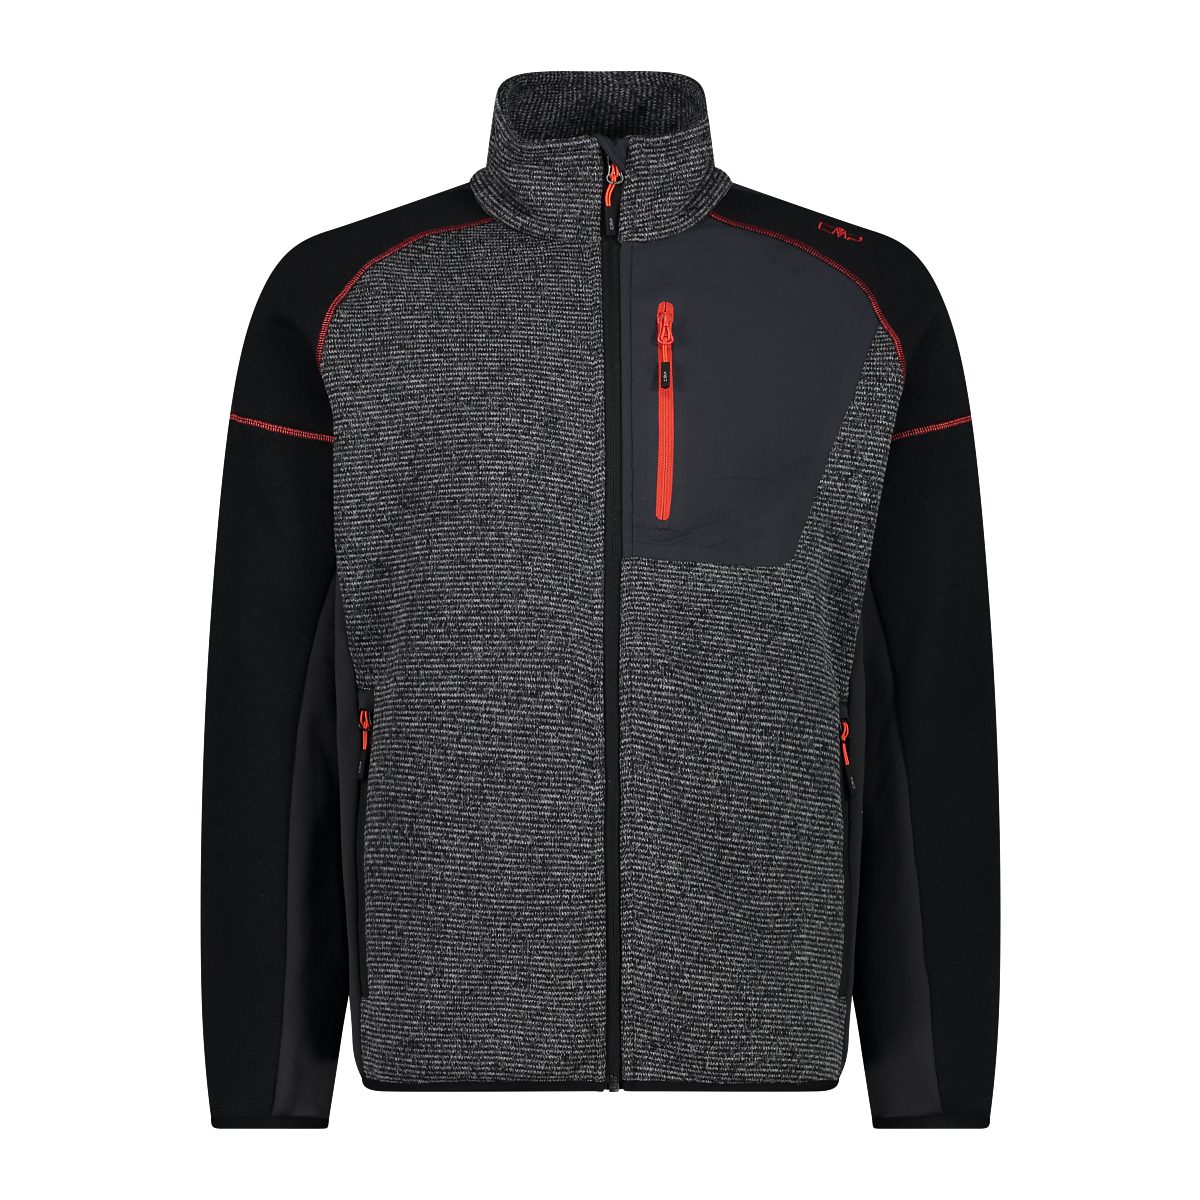 CMP Sweatjacke Man speziell Fleece 49PU Jacket grey verarbeitetes nero Knit-Tech Fleece 